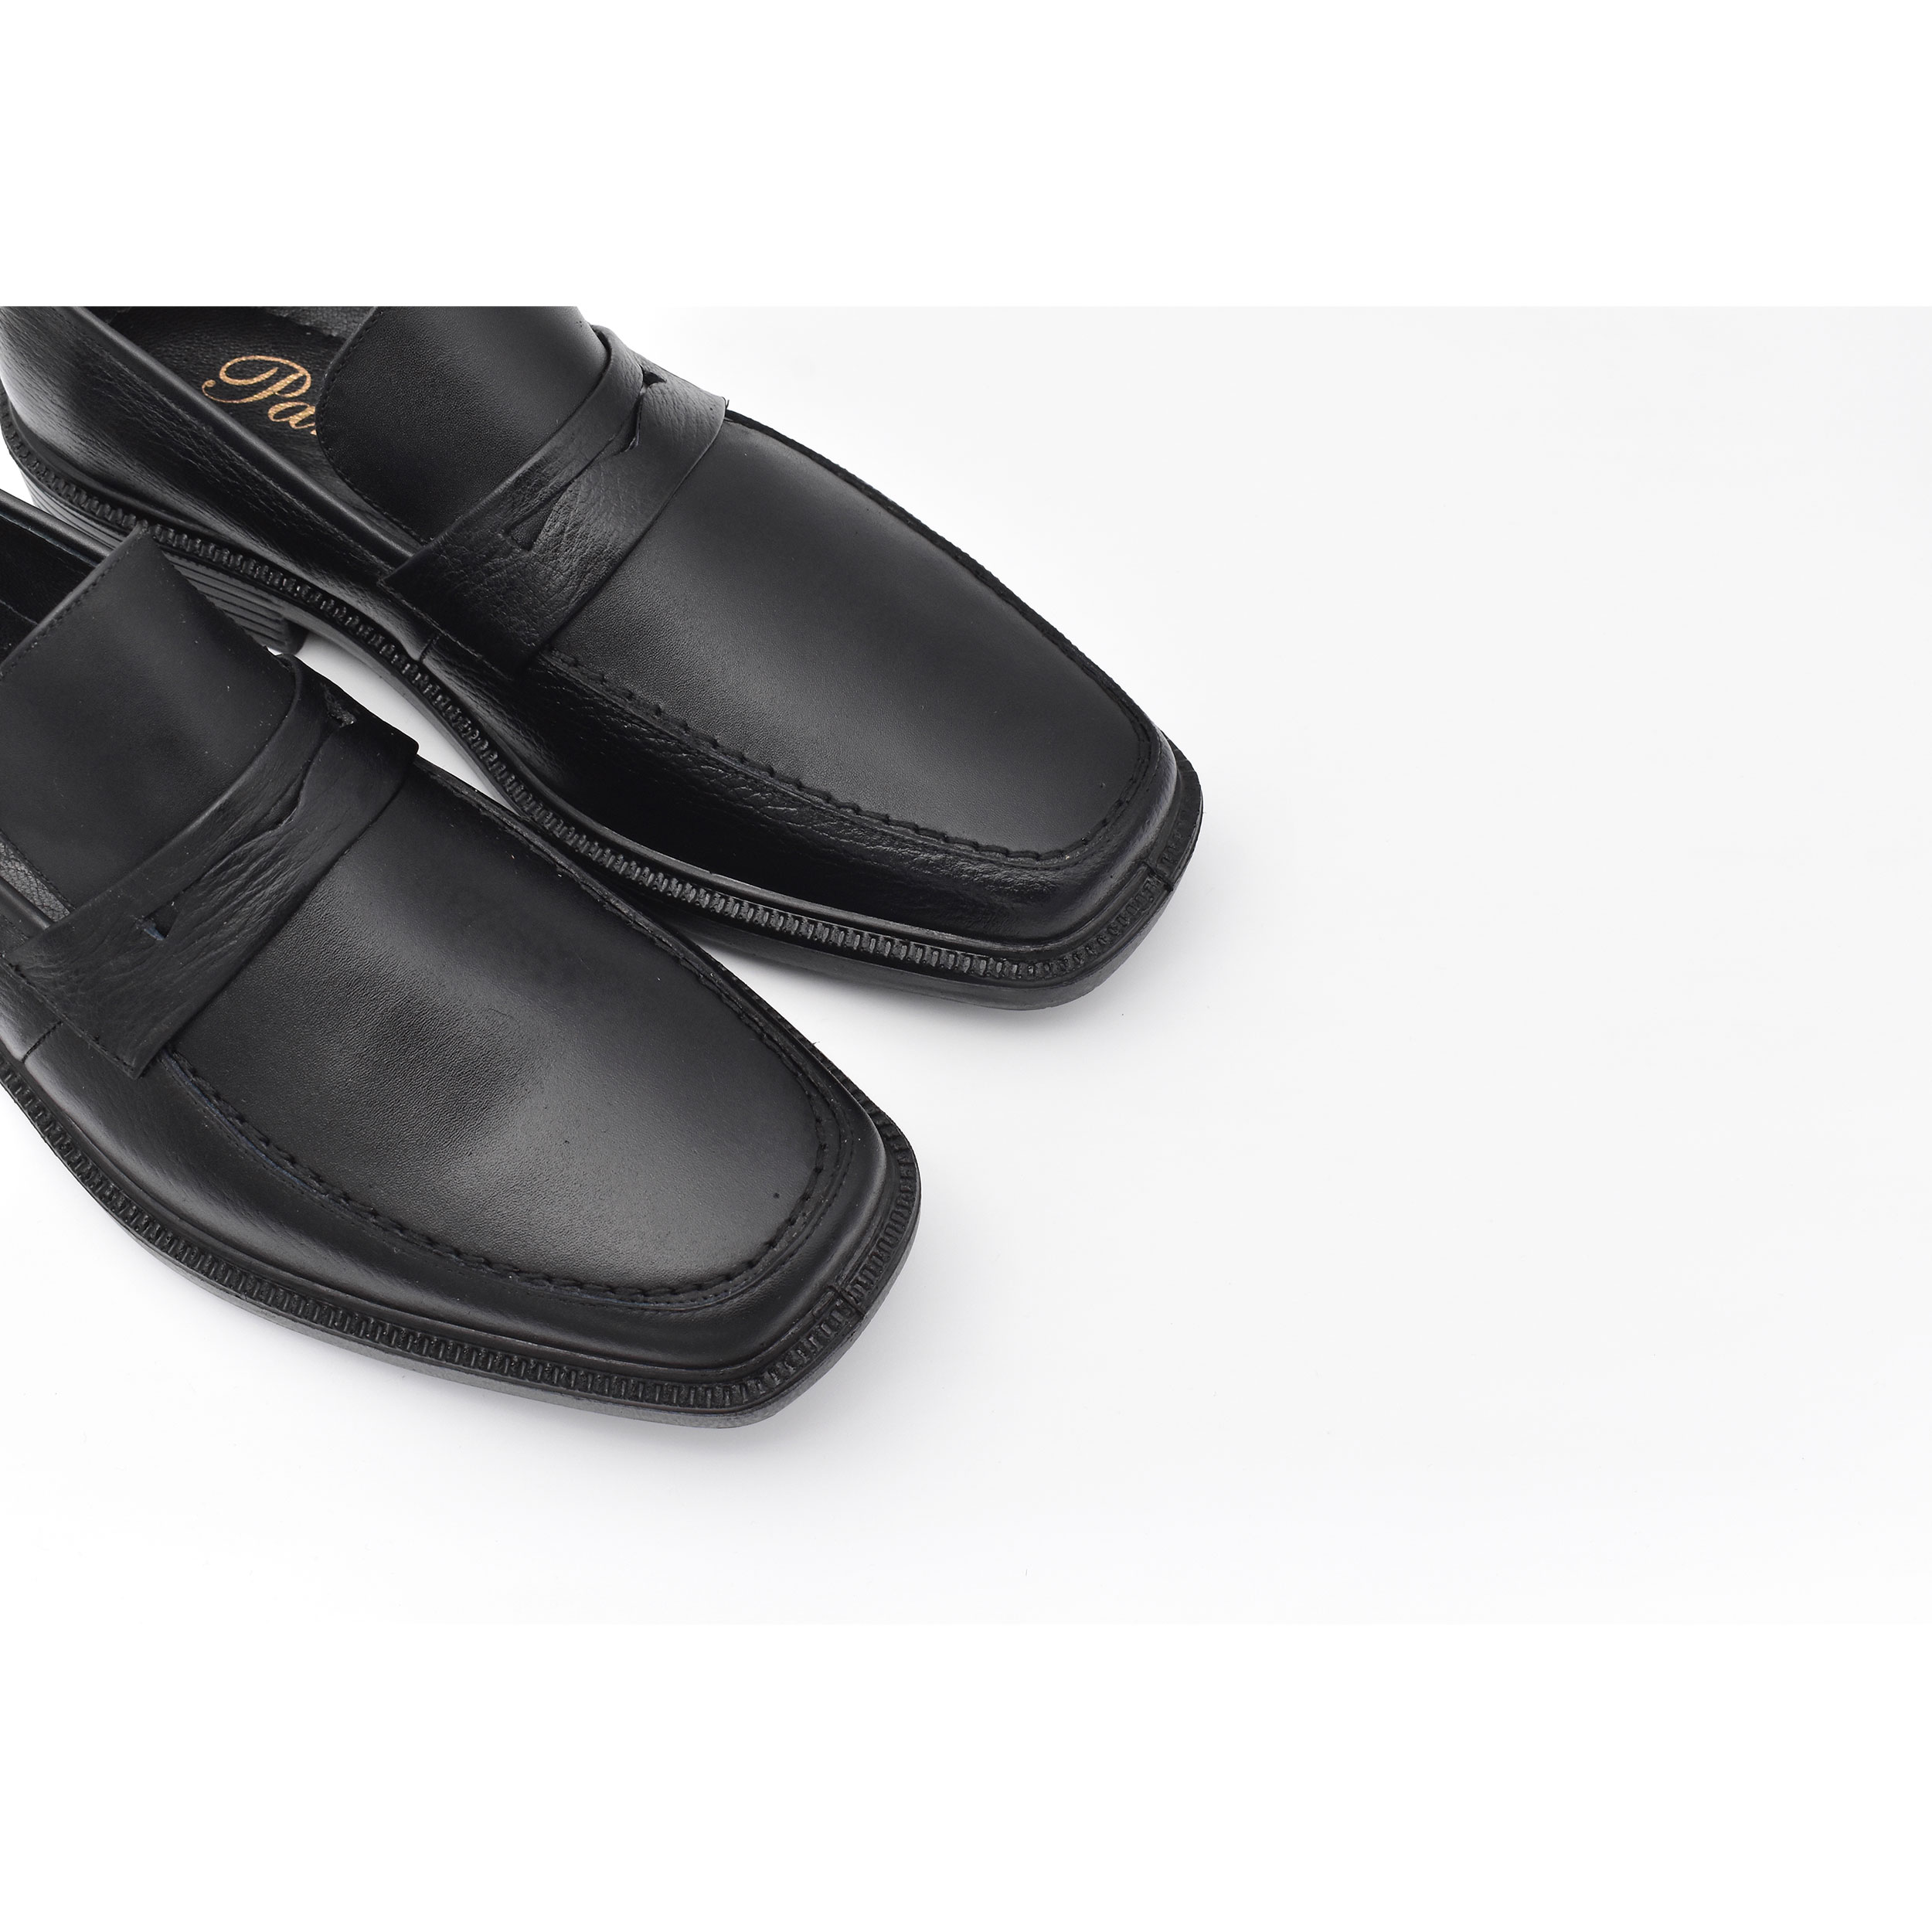 کفش مردانه پاما مدل Oscar کد G1189 -  - 3